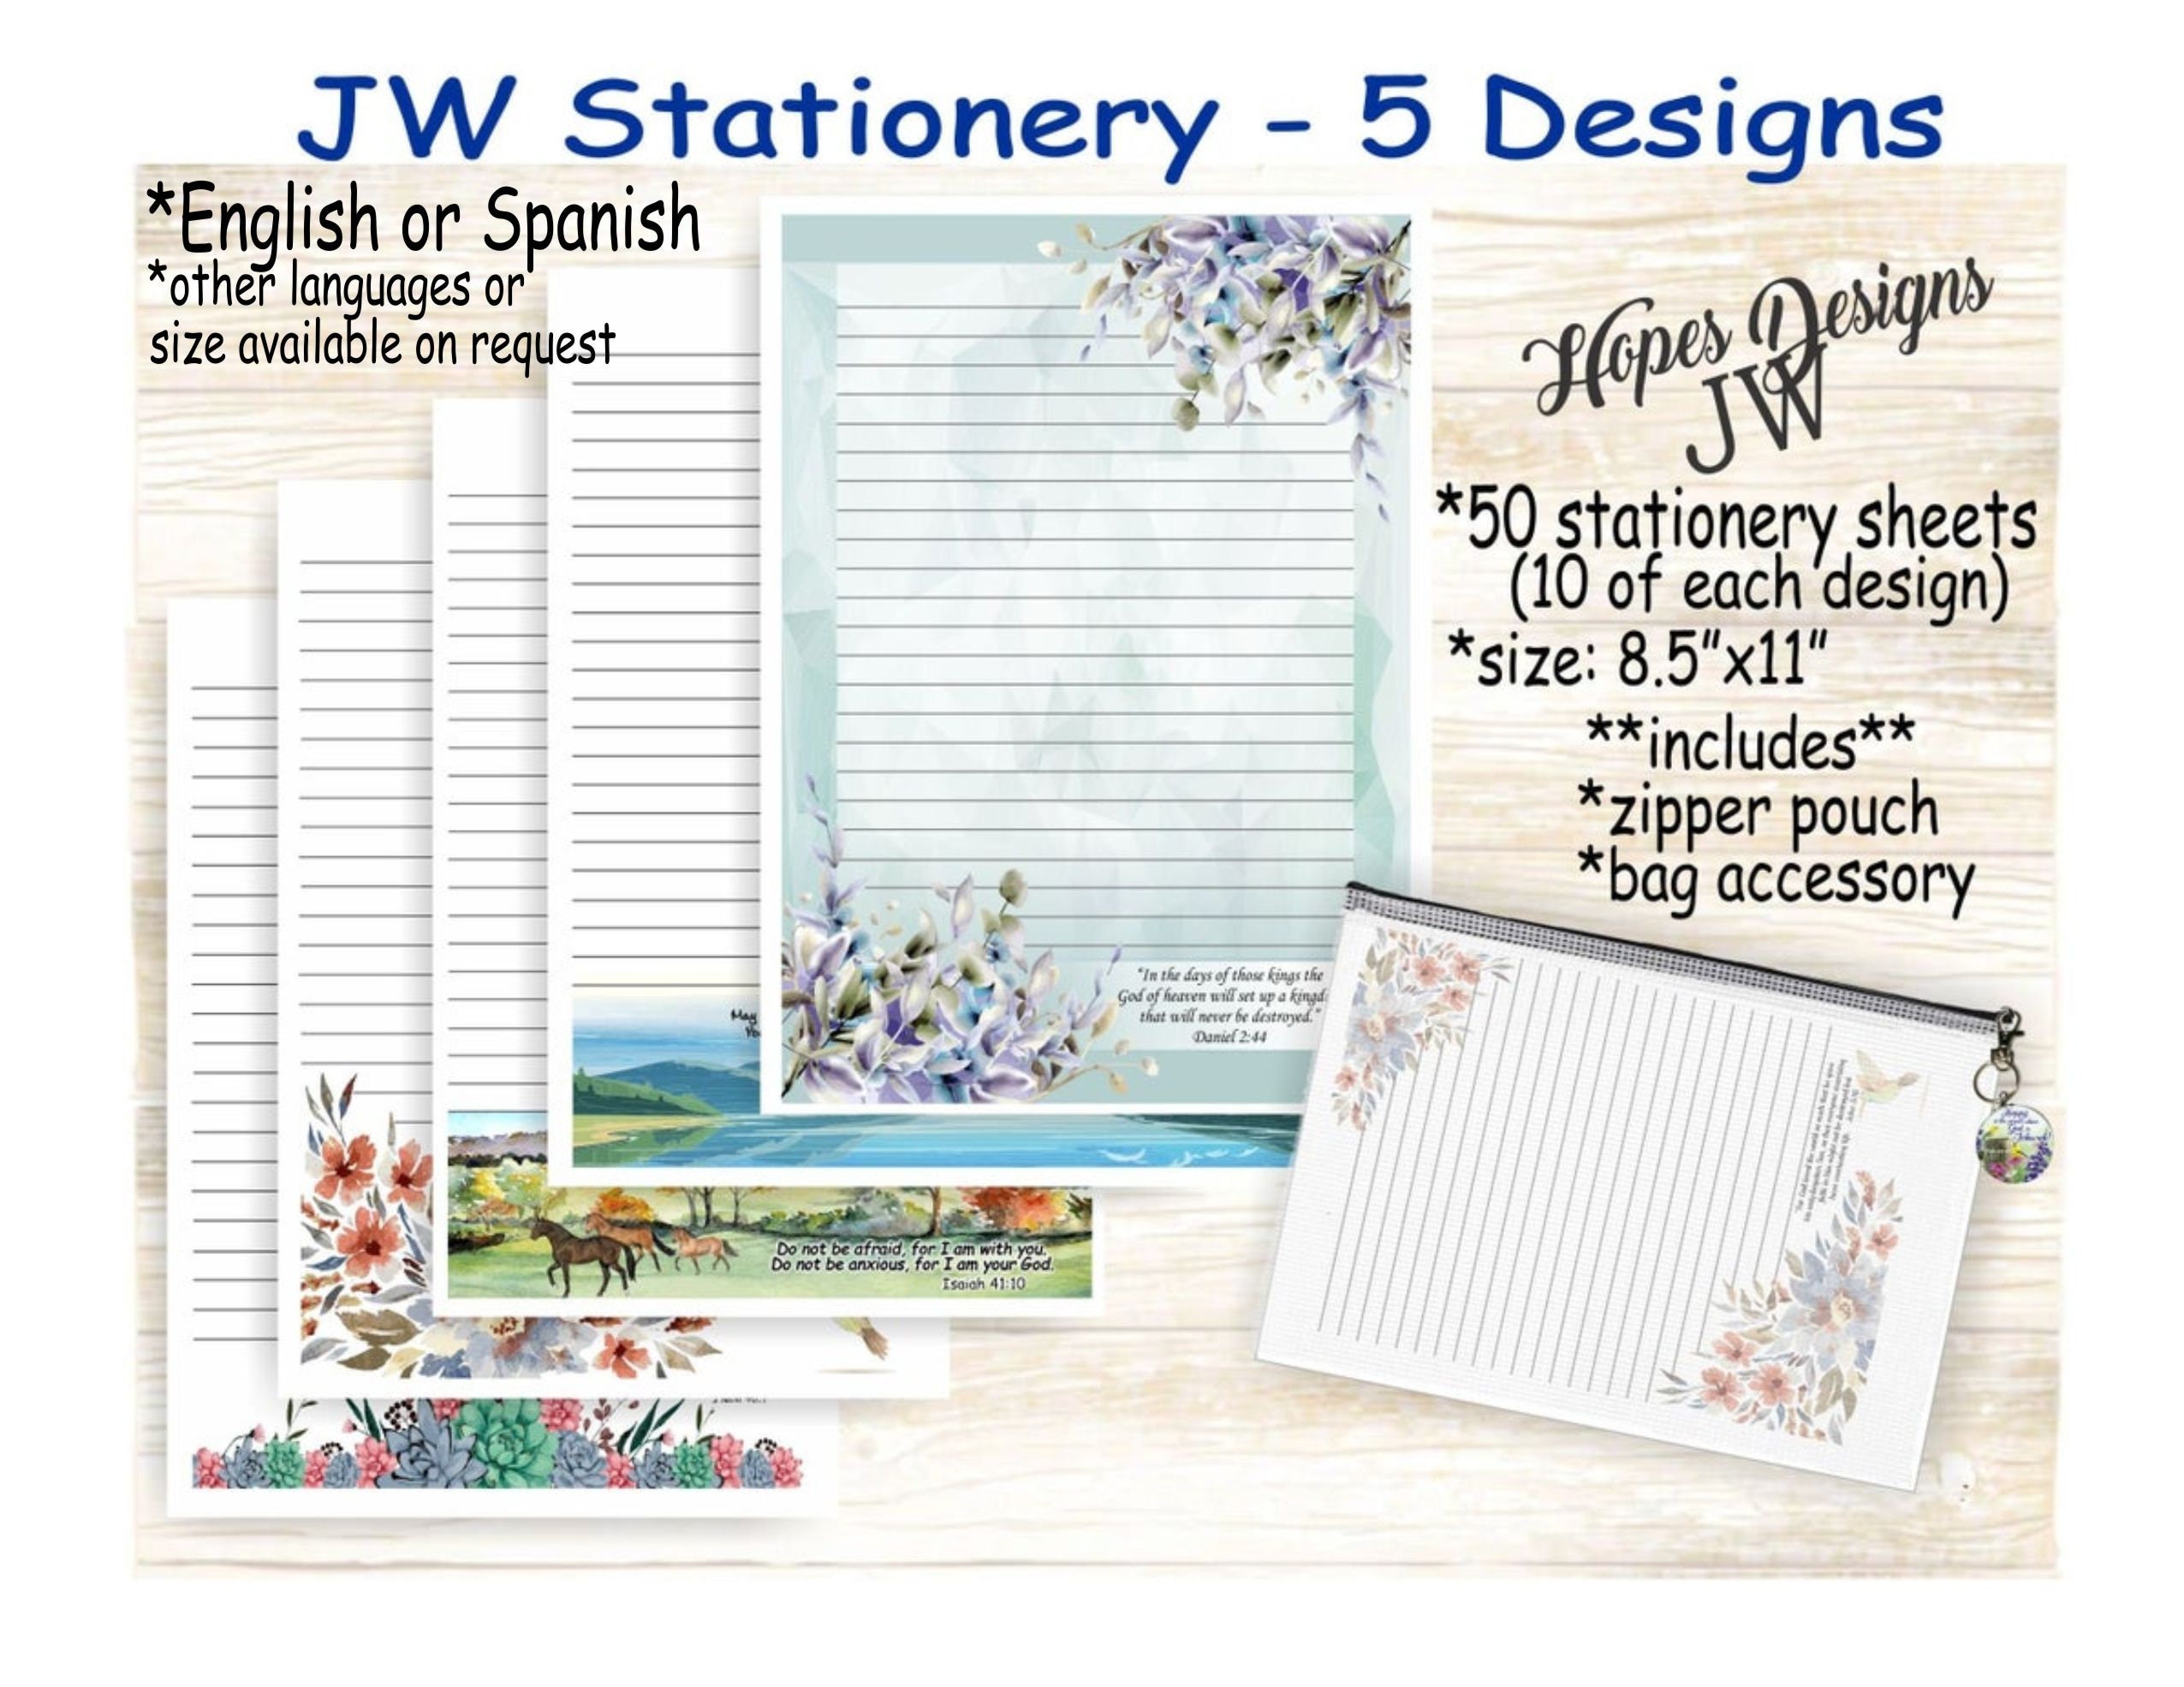 JW Magnets/ Jw Stationery/ Jw Gifts/ Jw Imanes/ Jw Pioneer Gifts